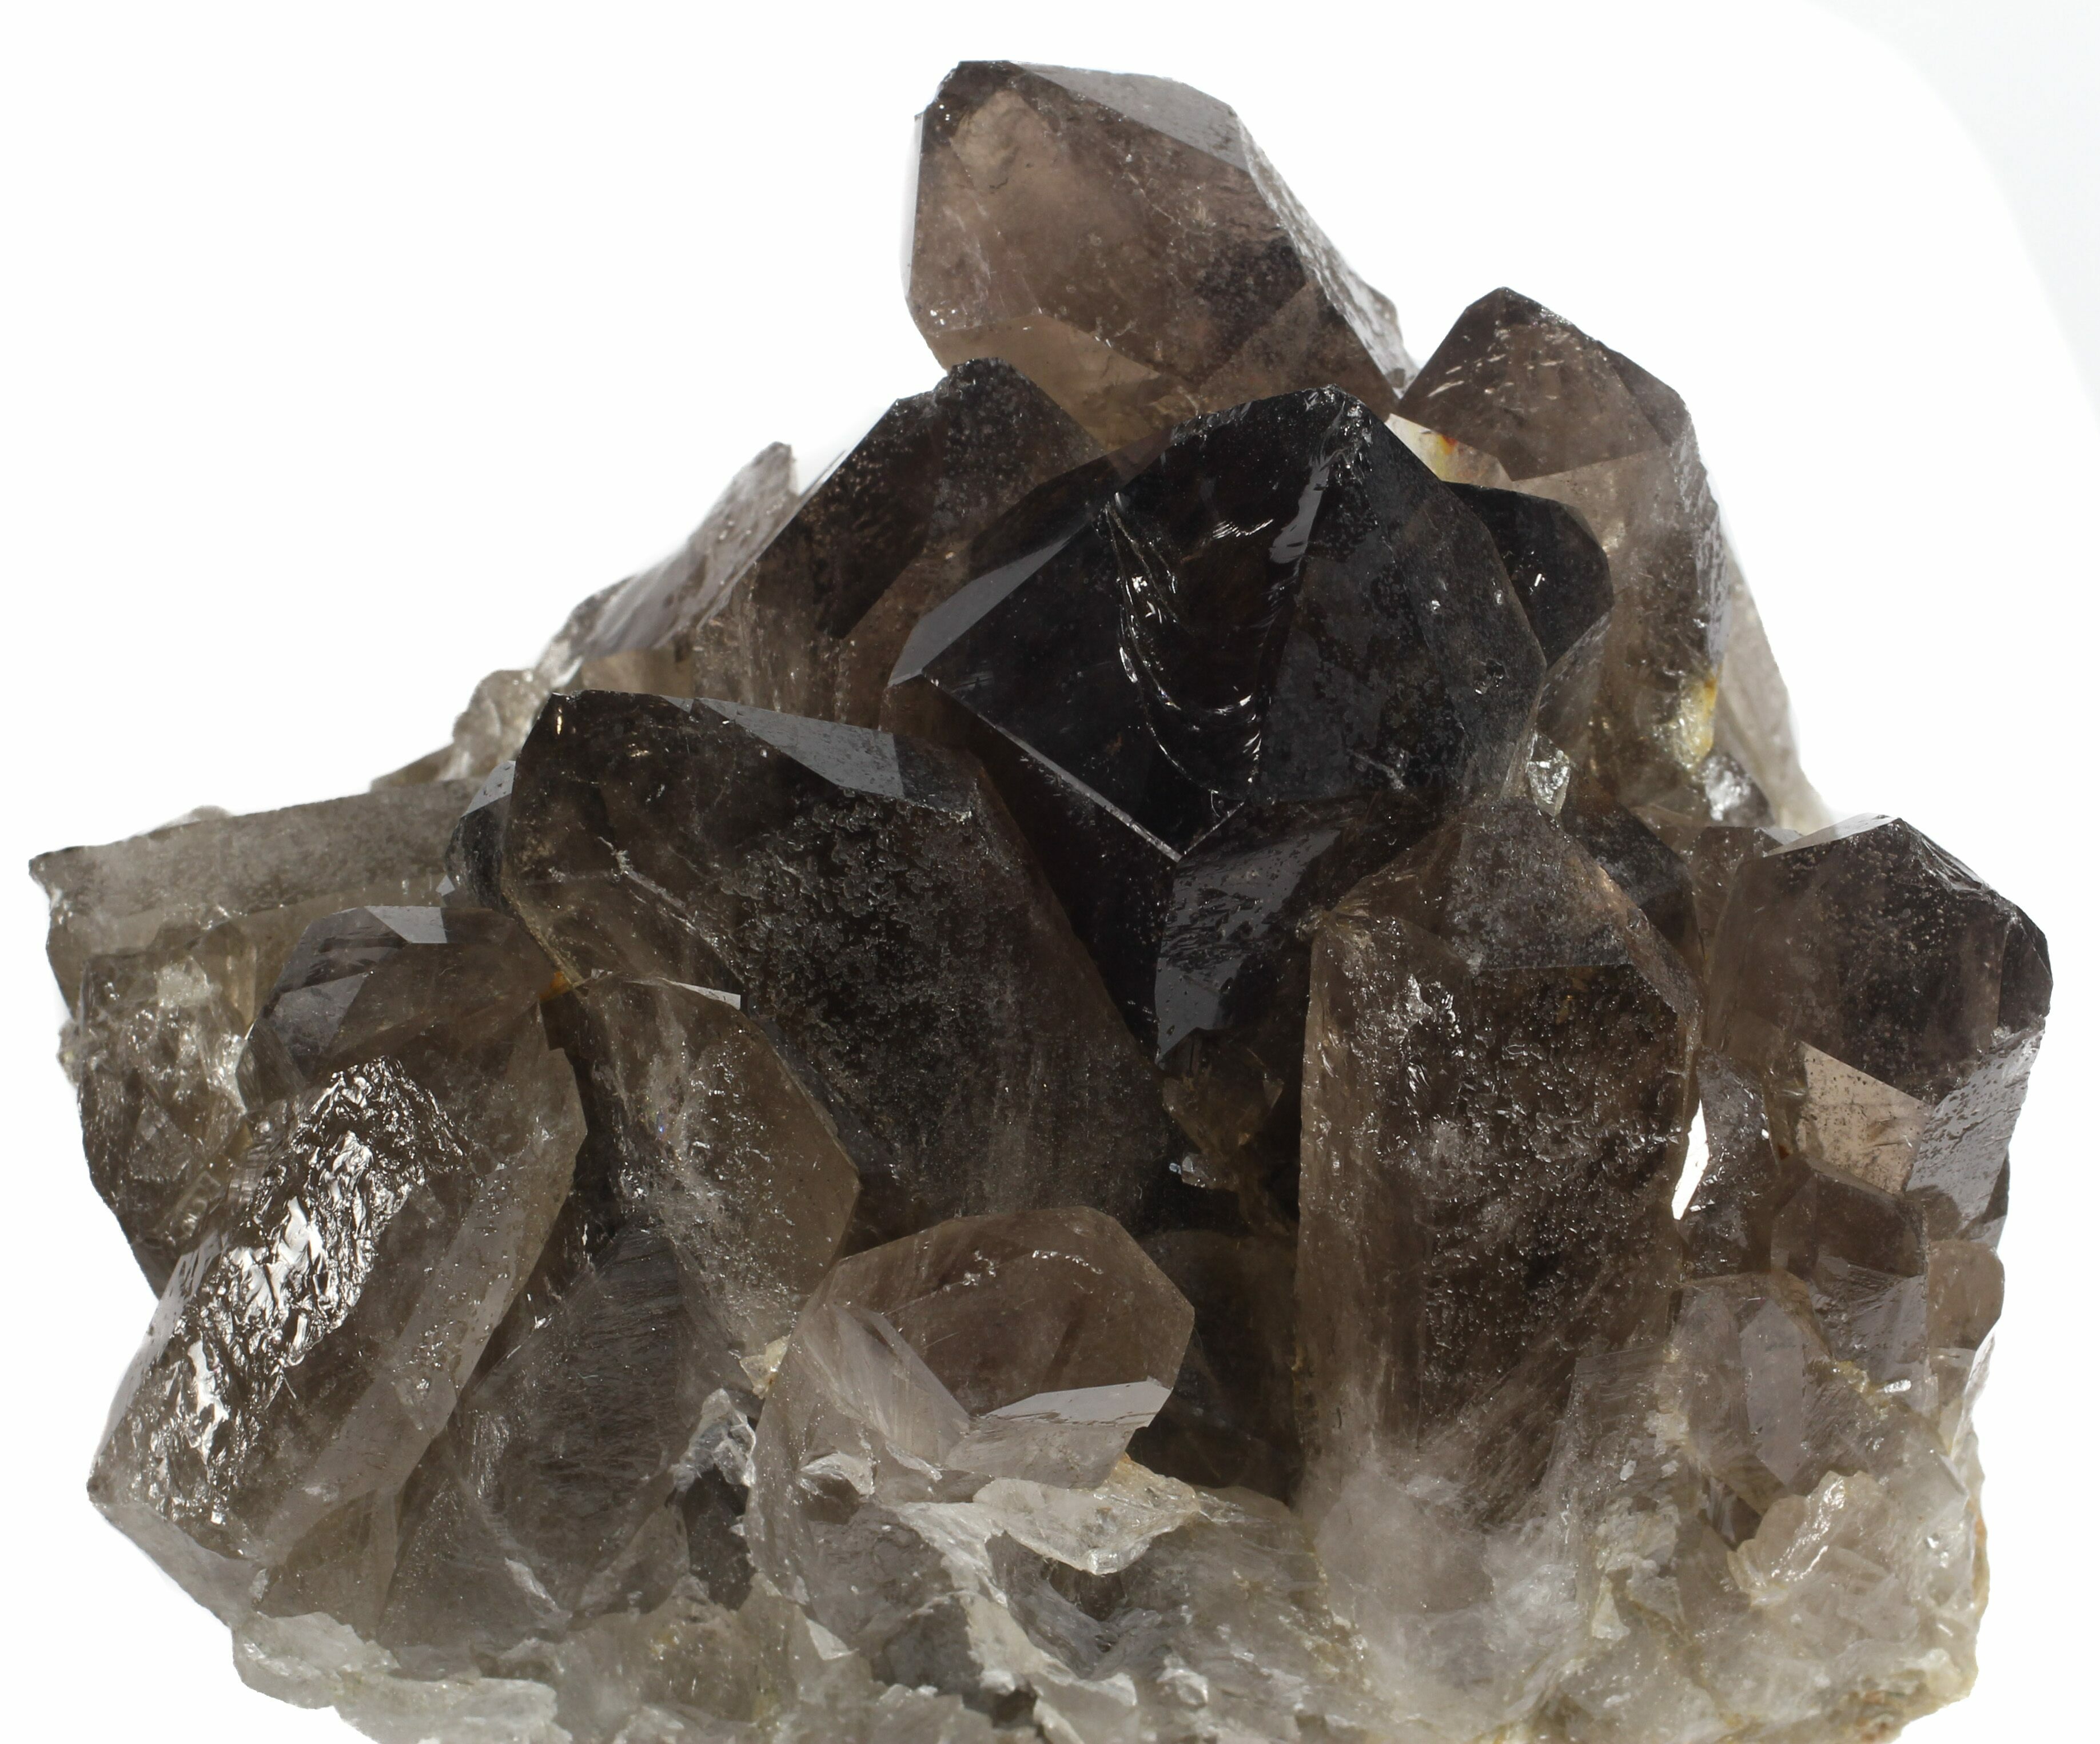 4.5 Dark Smoky Quartz Cluster - Large Crystals (Special Price